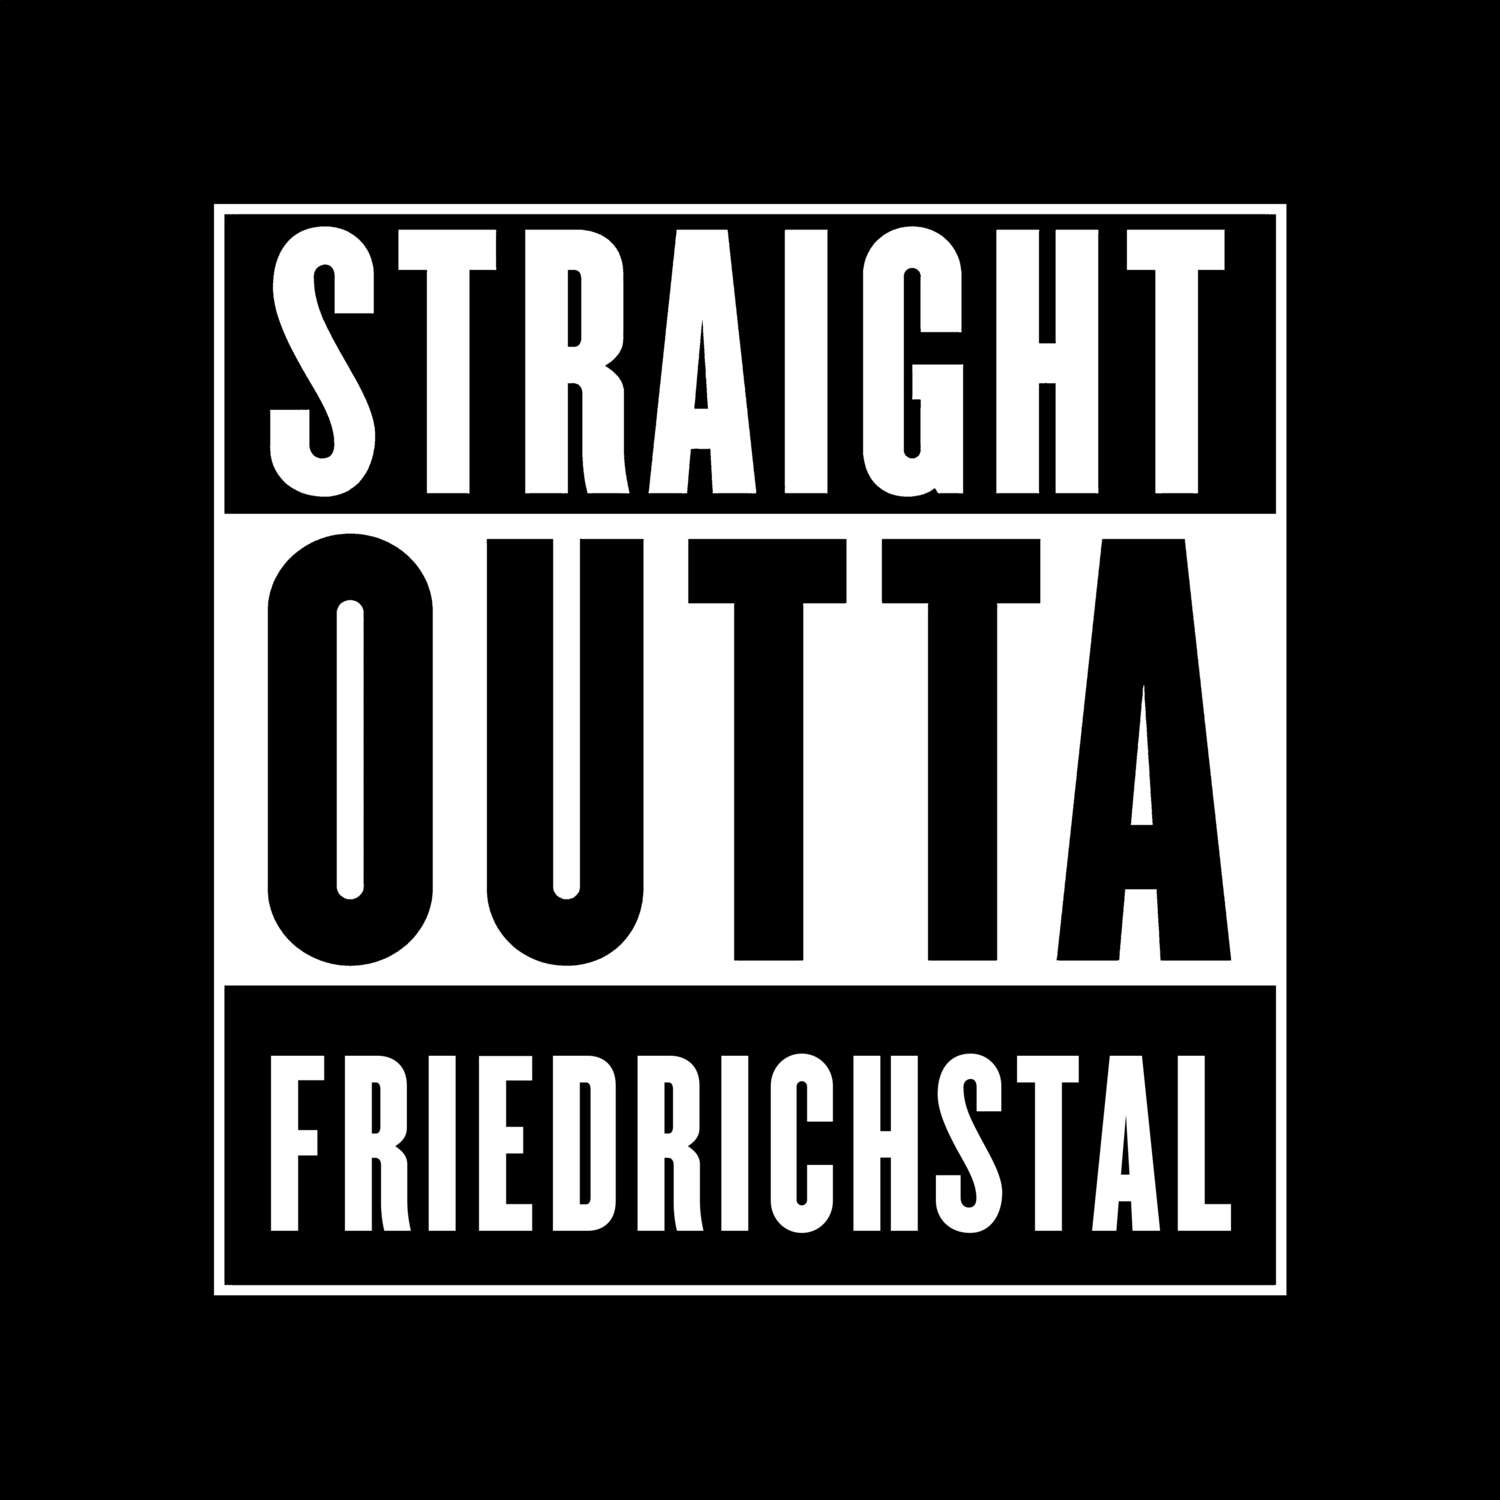 Friedrichstal T-Shirt »Straight Outta«